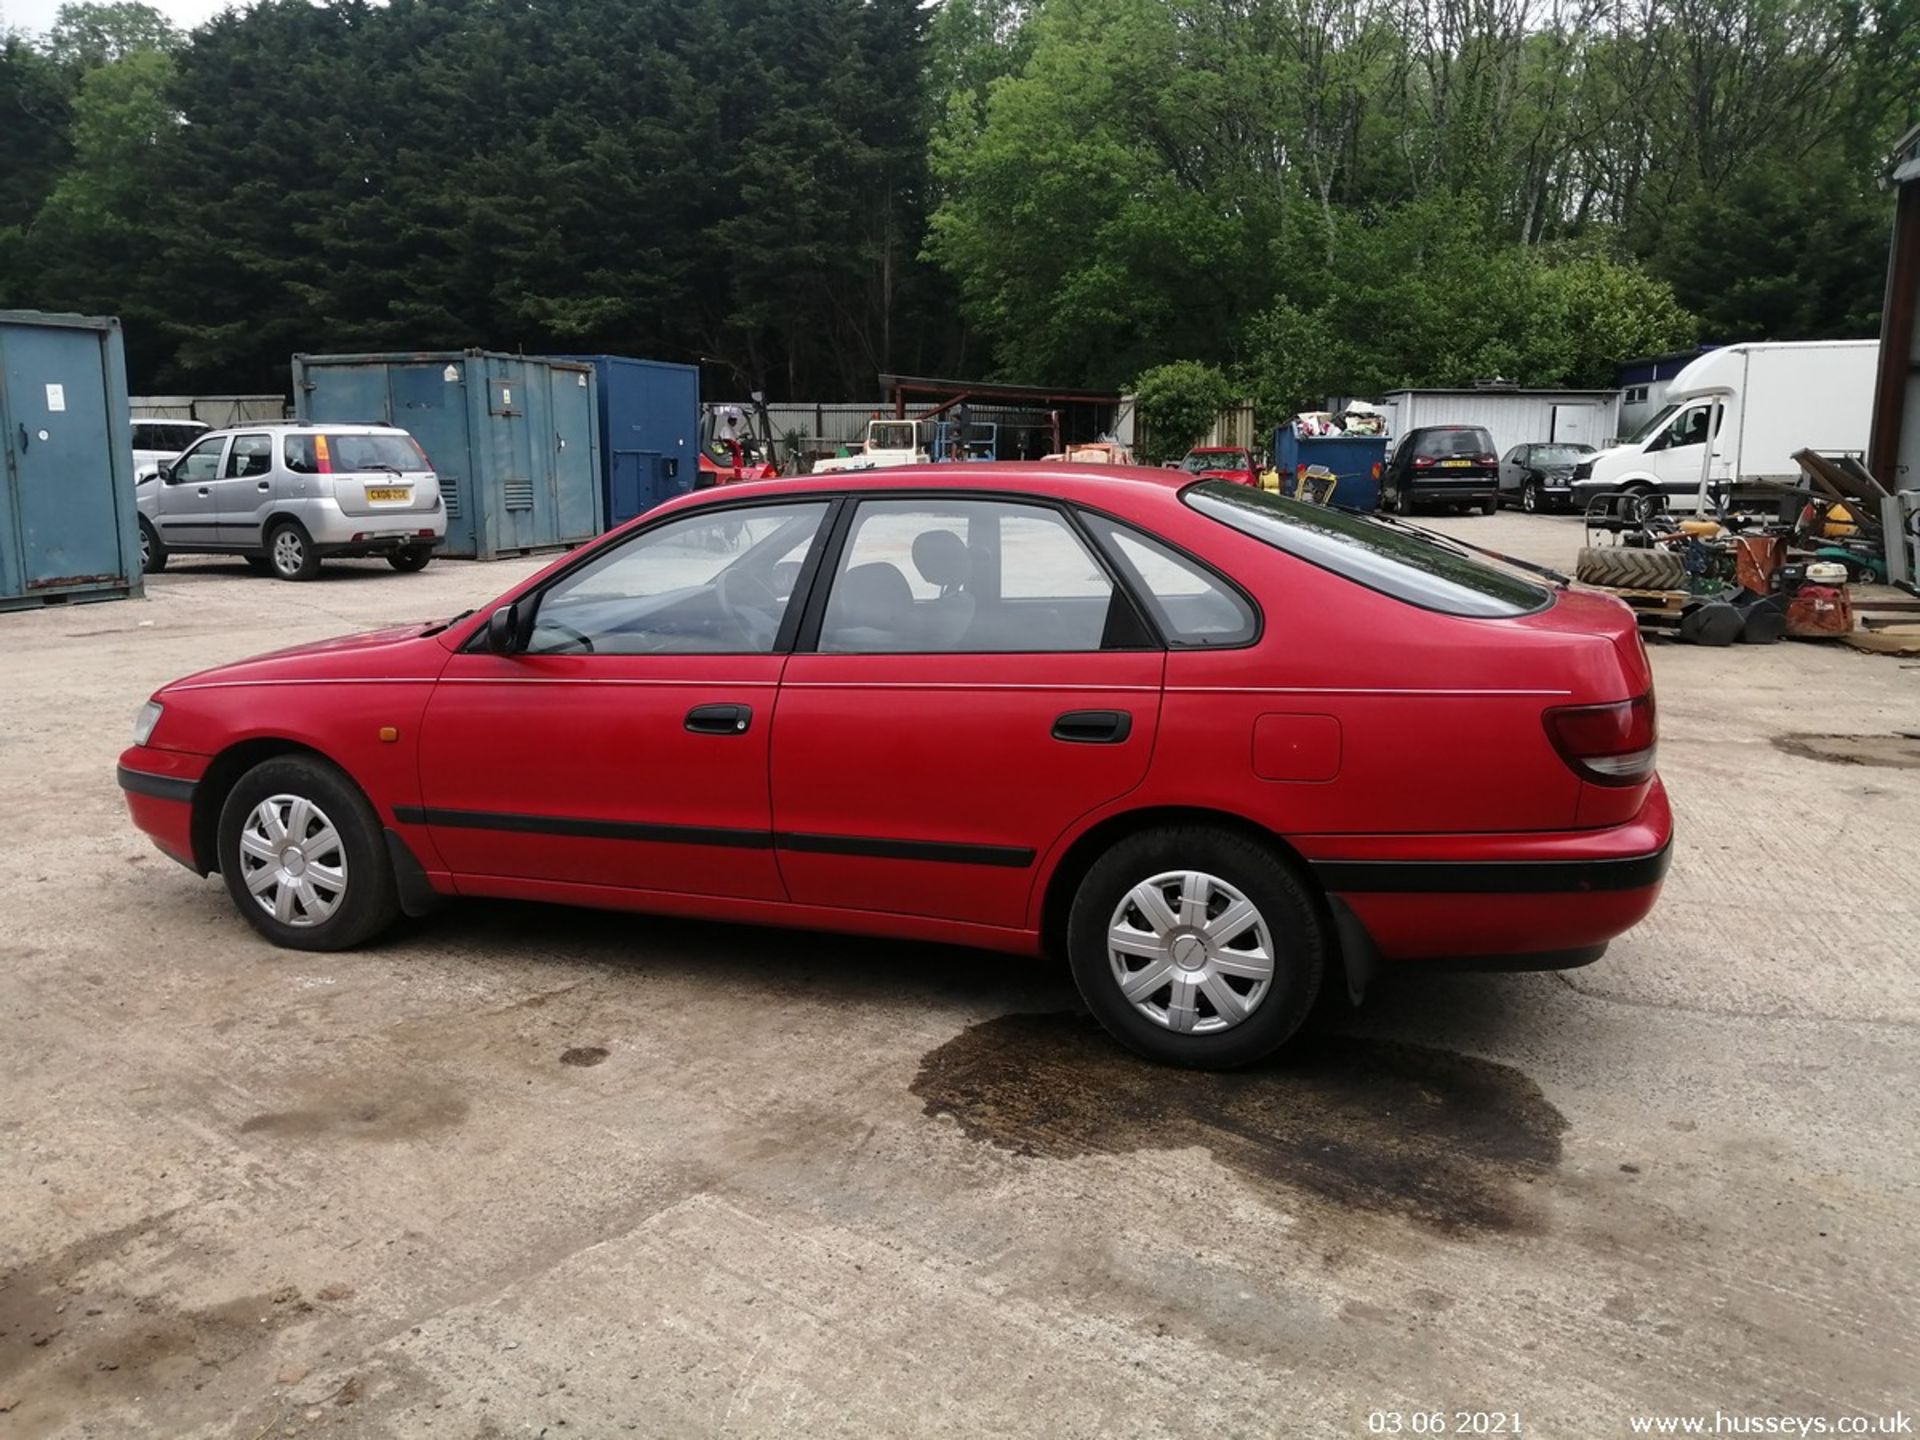 1993 TOYOTA CARINA E GLI AUTO - 1587cc 5dr Hatchback (Red) - Image 3 of 10